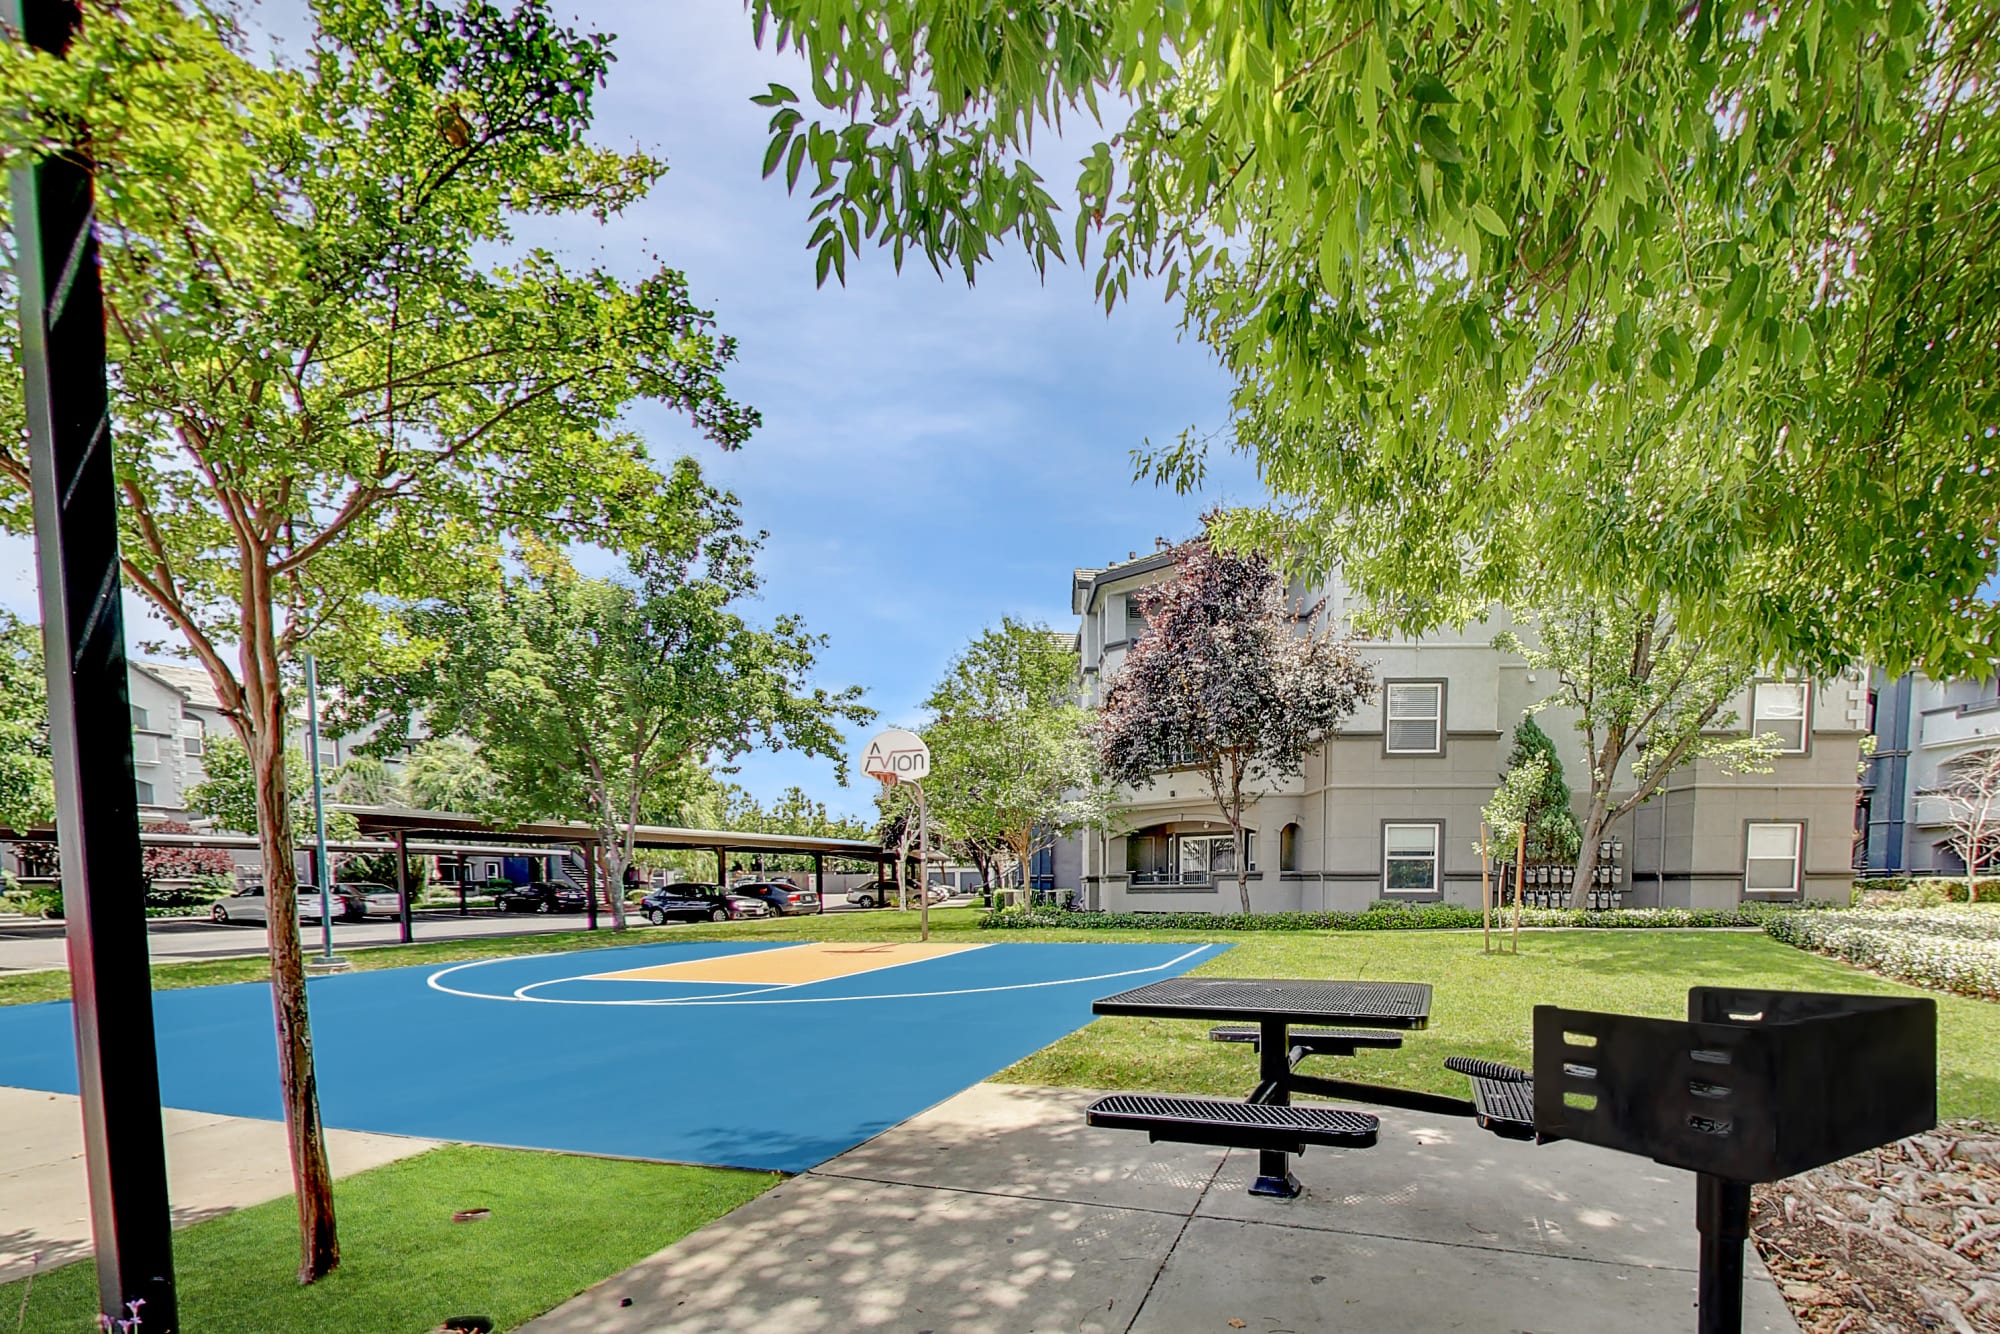 Community basketball court at Avion Apartments in Rancho Cordova, California